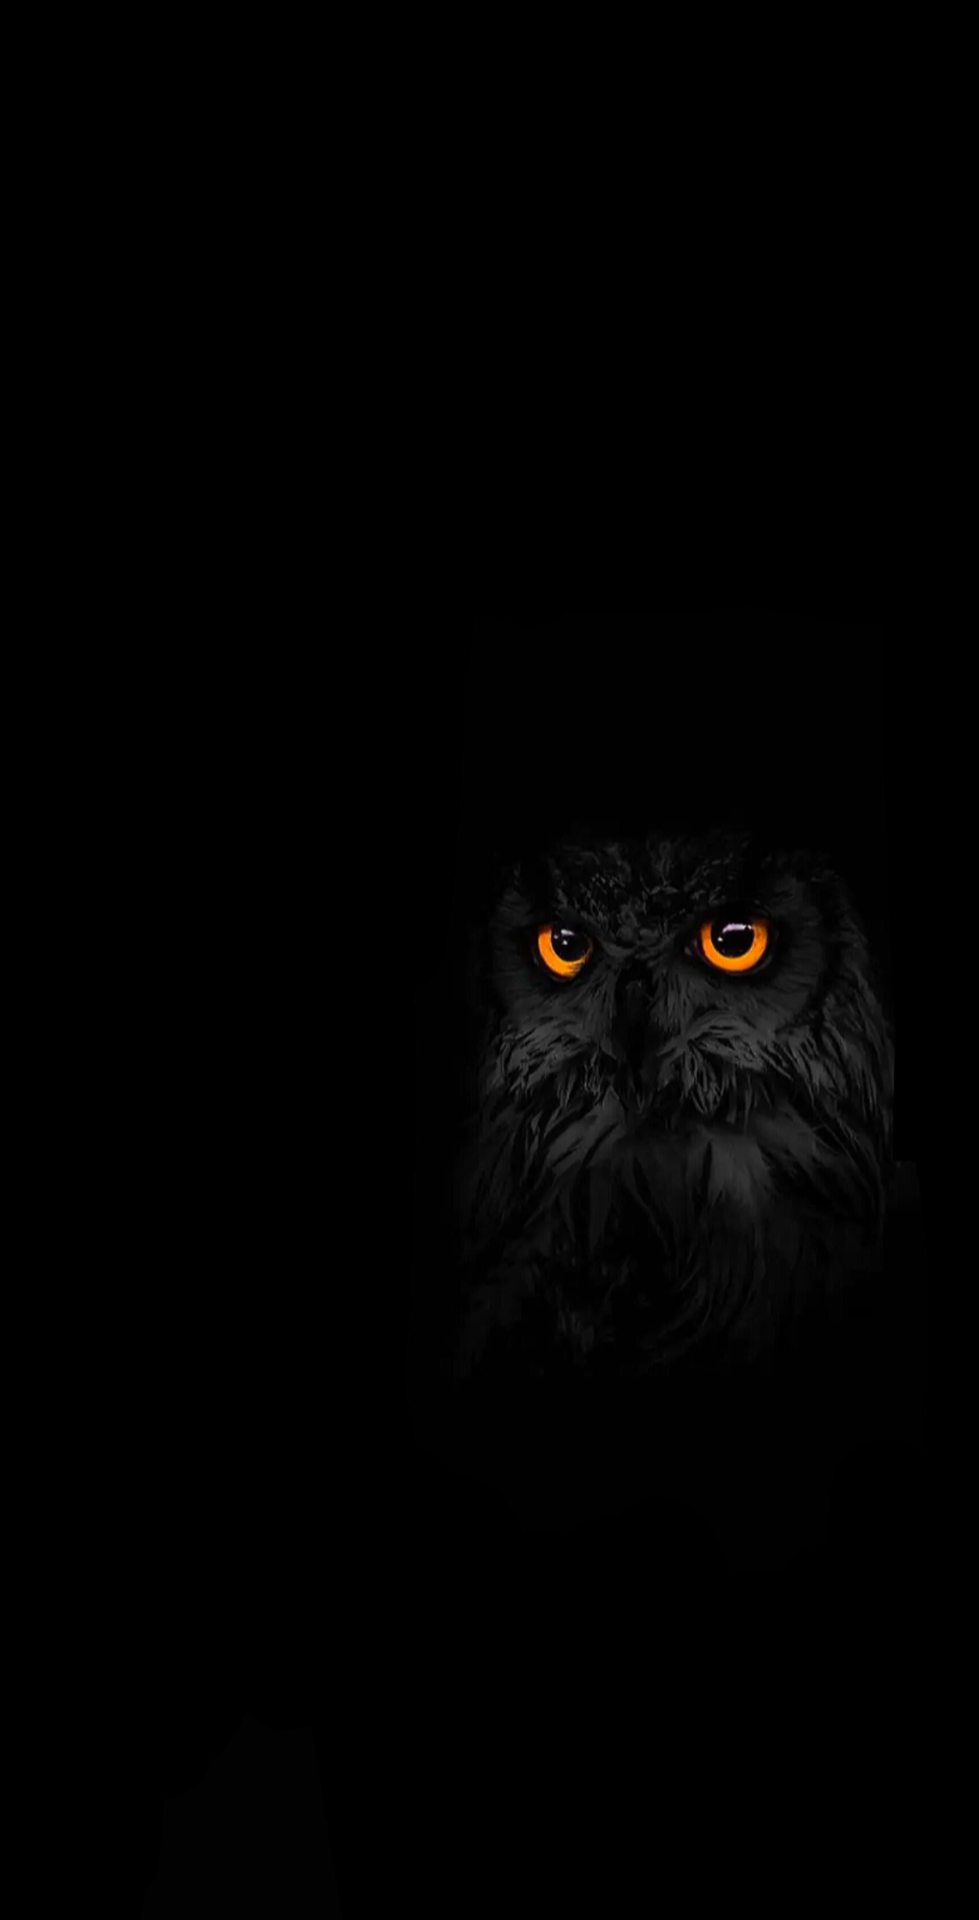 Owl Wallpapers: Free HD Download [500+ HQ] | Unsplash